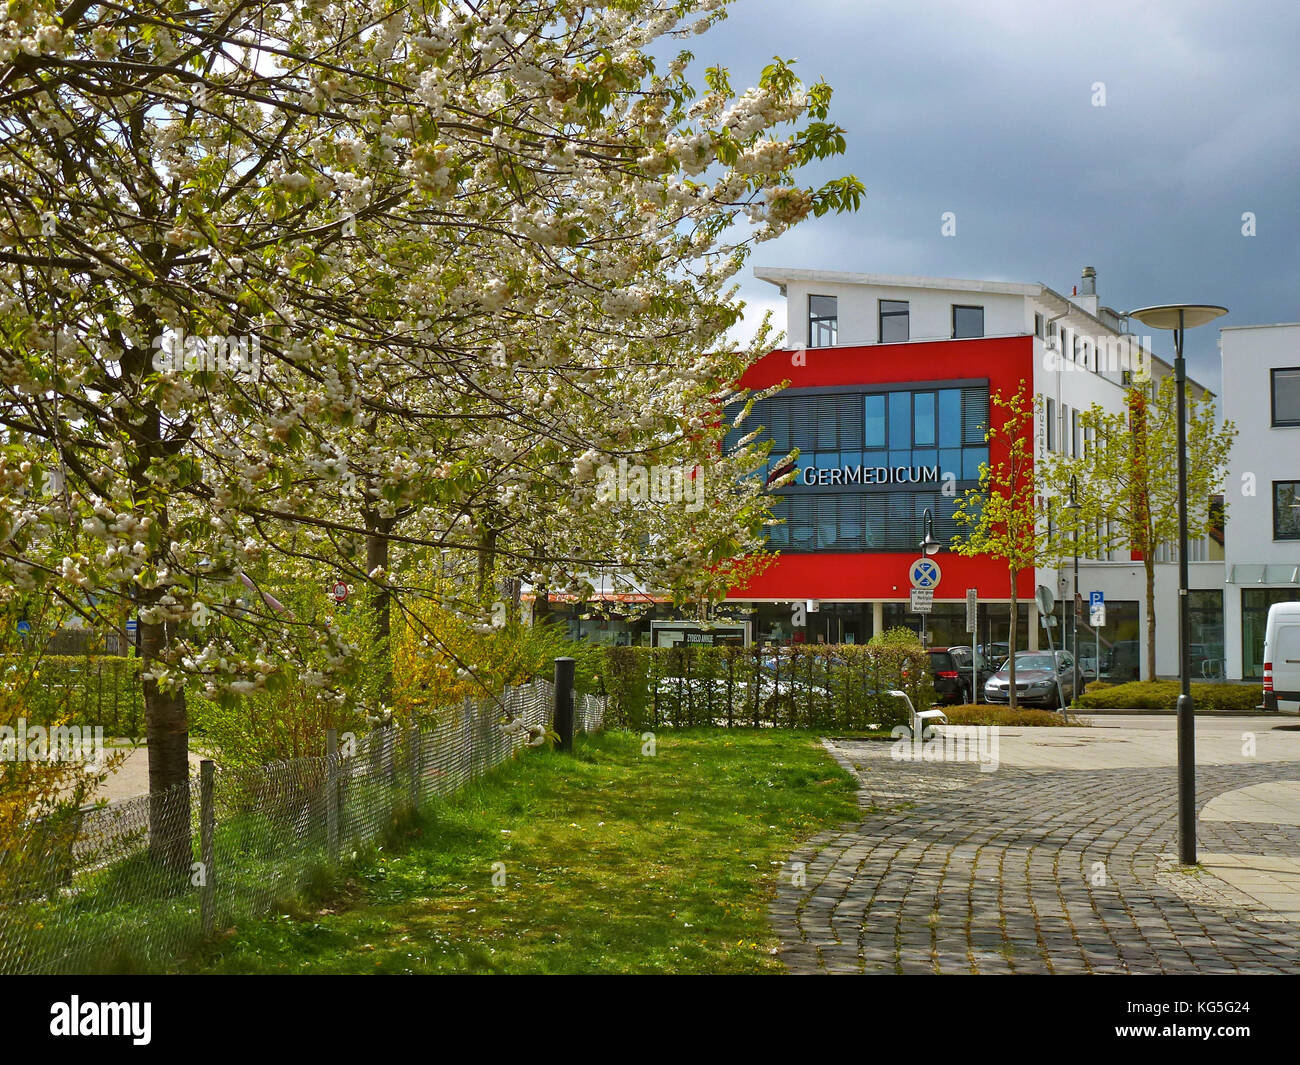 Germany, Bavaria, Germering, Germedicum, medical centre, blooming cherry trees, spring Stock Photo